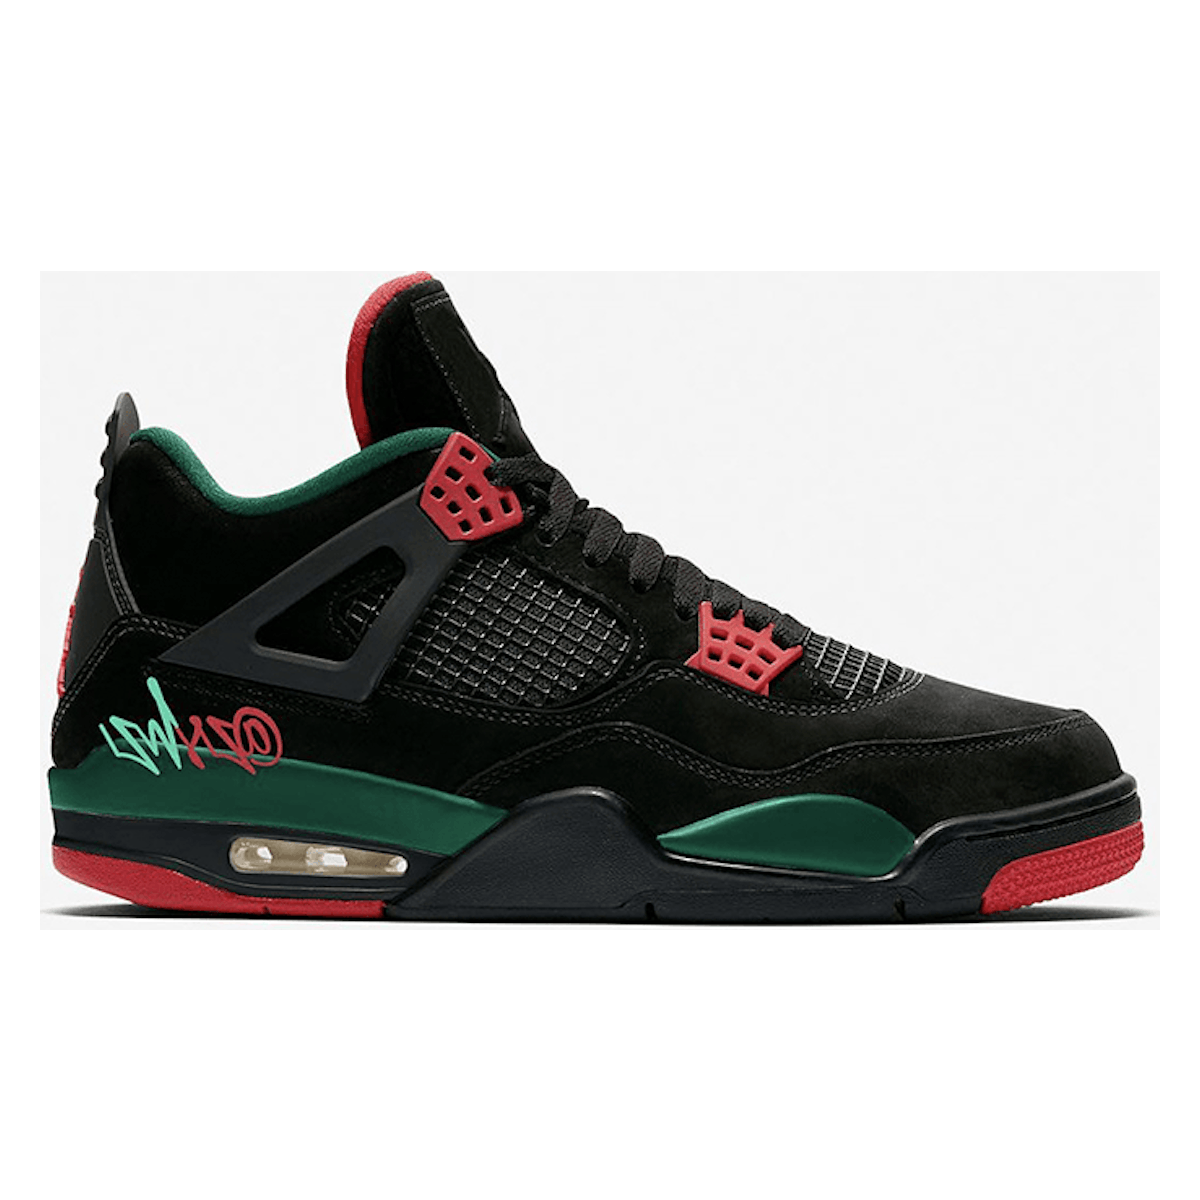 Air Jordan 4 Retro NRG "Do The Right Thing" Black/Green